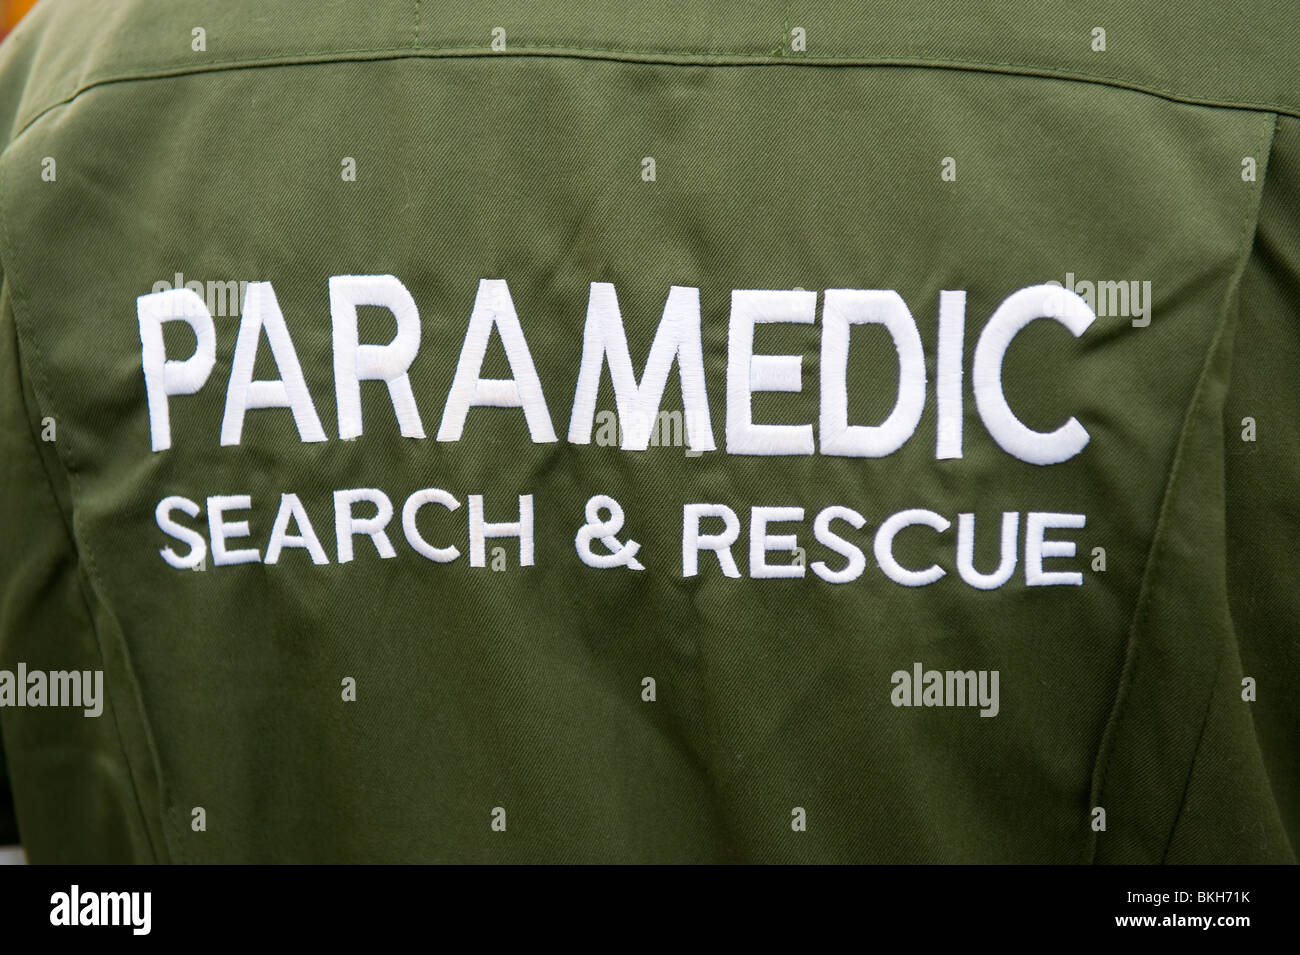 Paramedic Search & Rescue Stock Photo